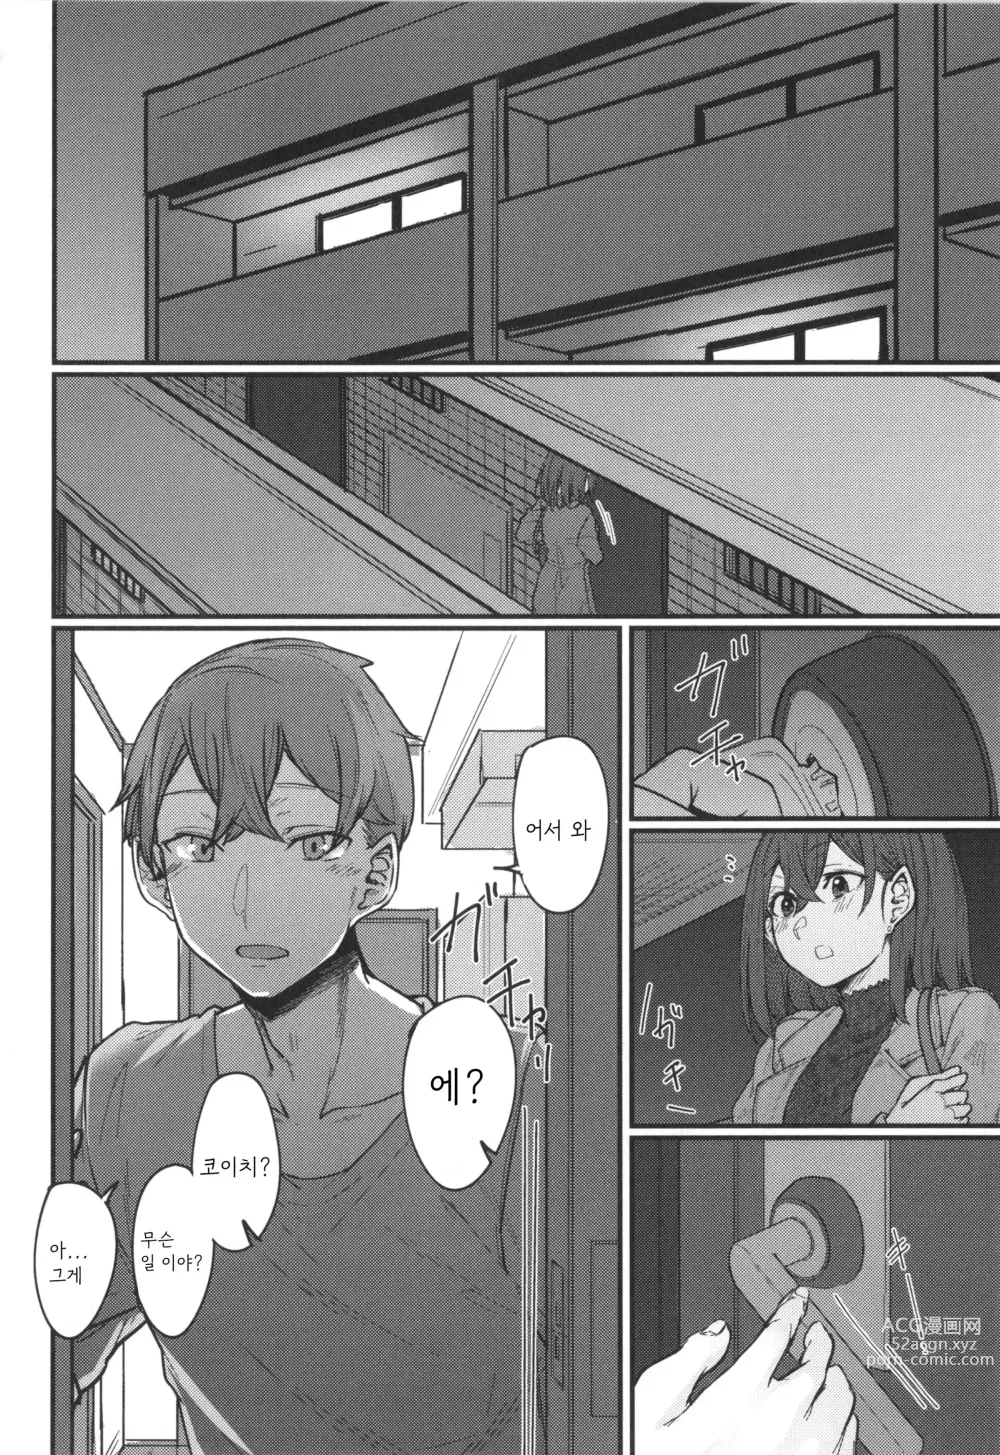 Page 2 of manga Futari no Mirai